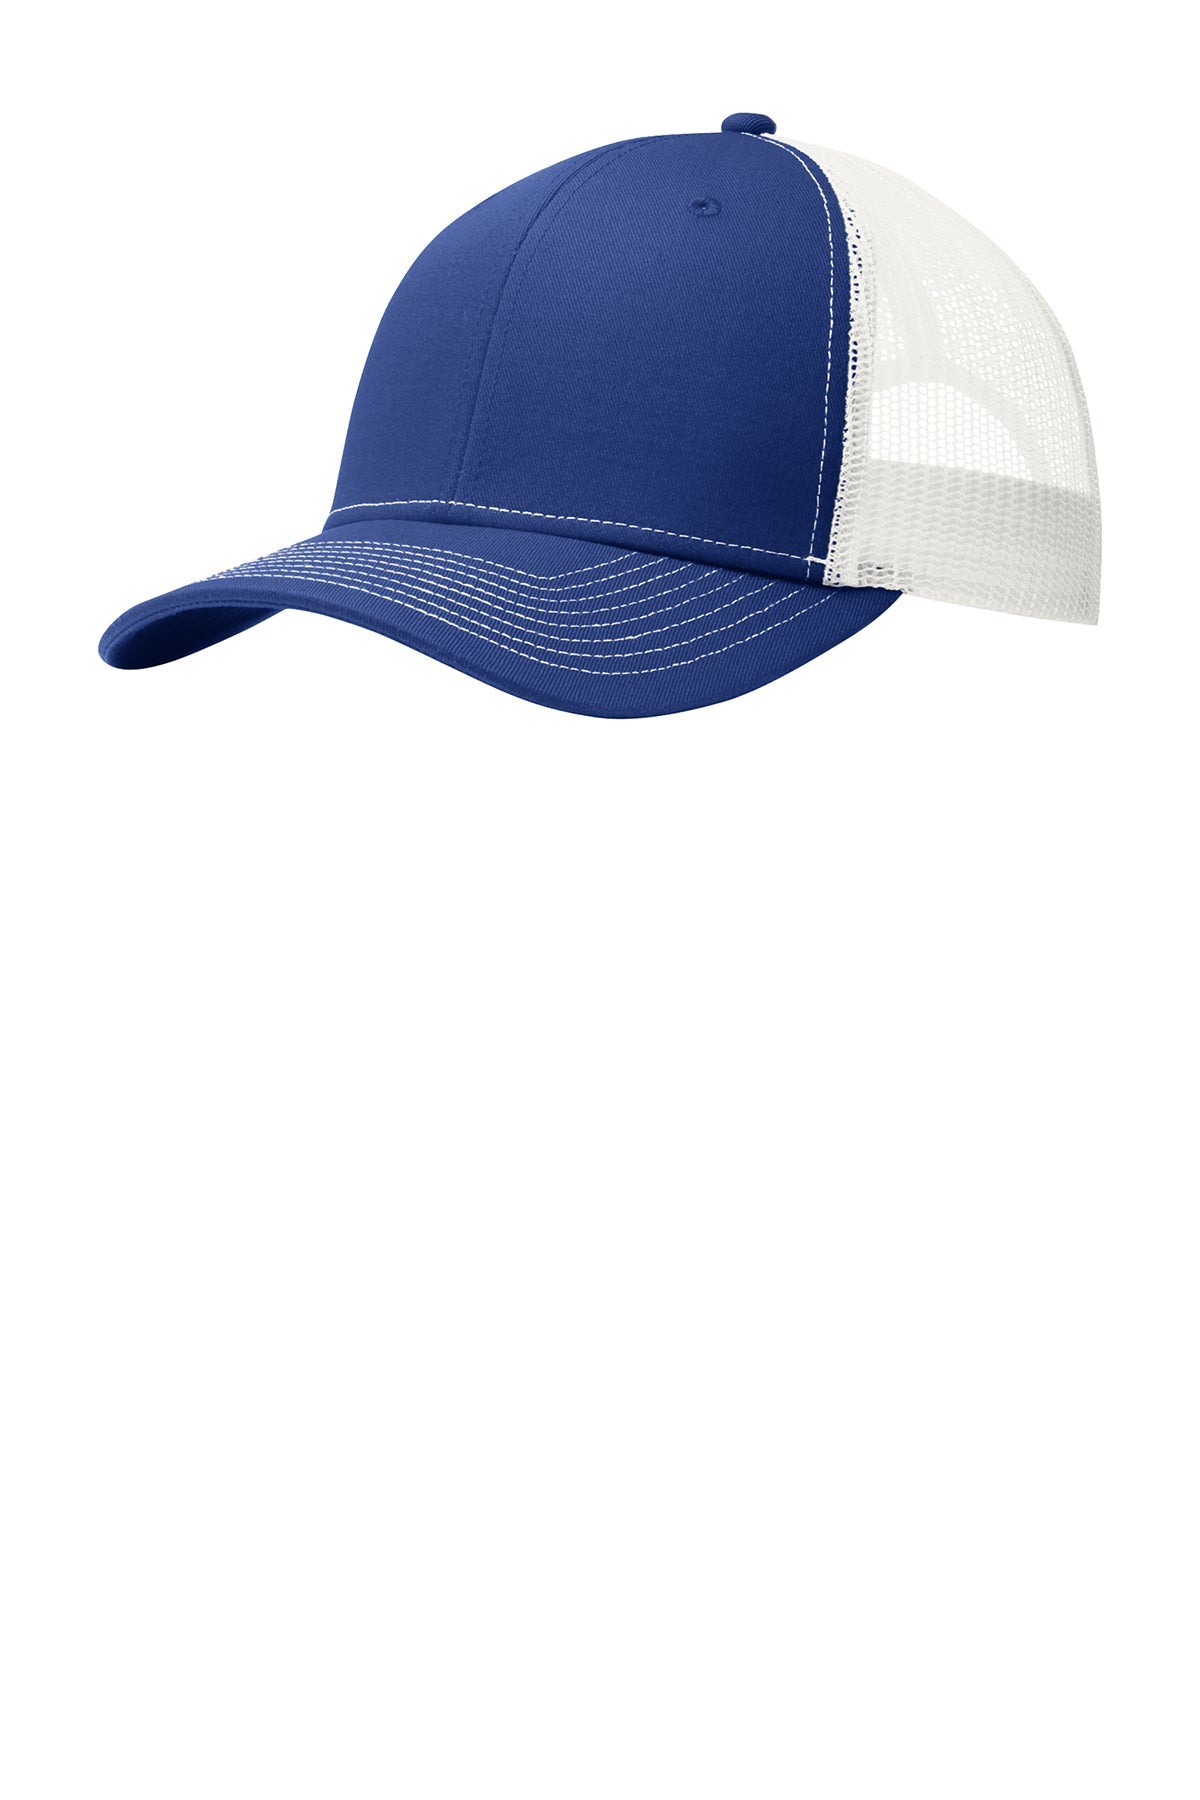 Port Authority Snapback Trucker Branded Caps, Patriot Blue/ White